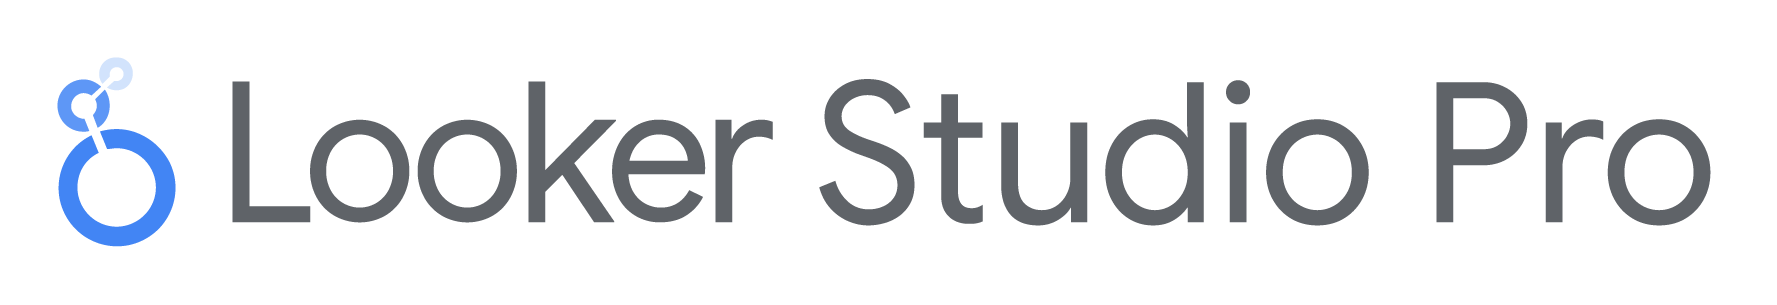 Looker Studio Pro logo.